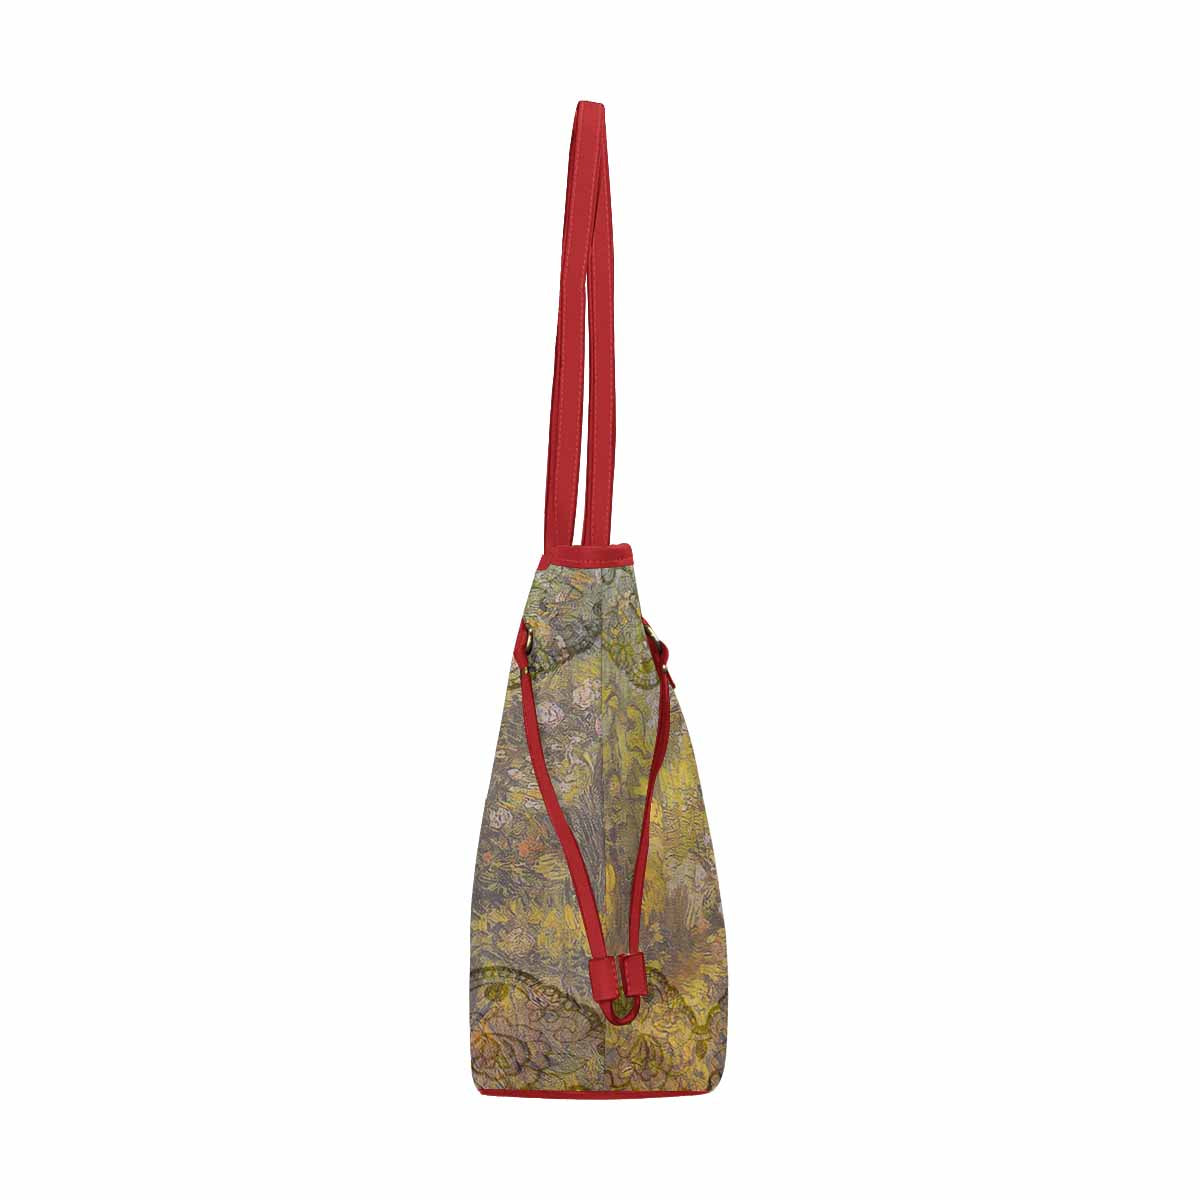 Vintage Floral Handbag, Classic Handbag, Mod 1695361 Design 05x, RED TRIM